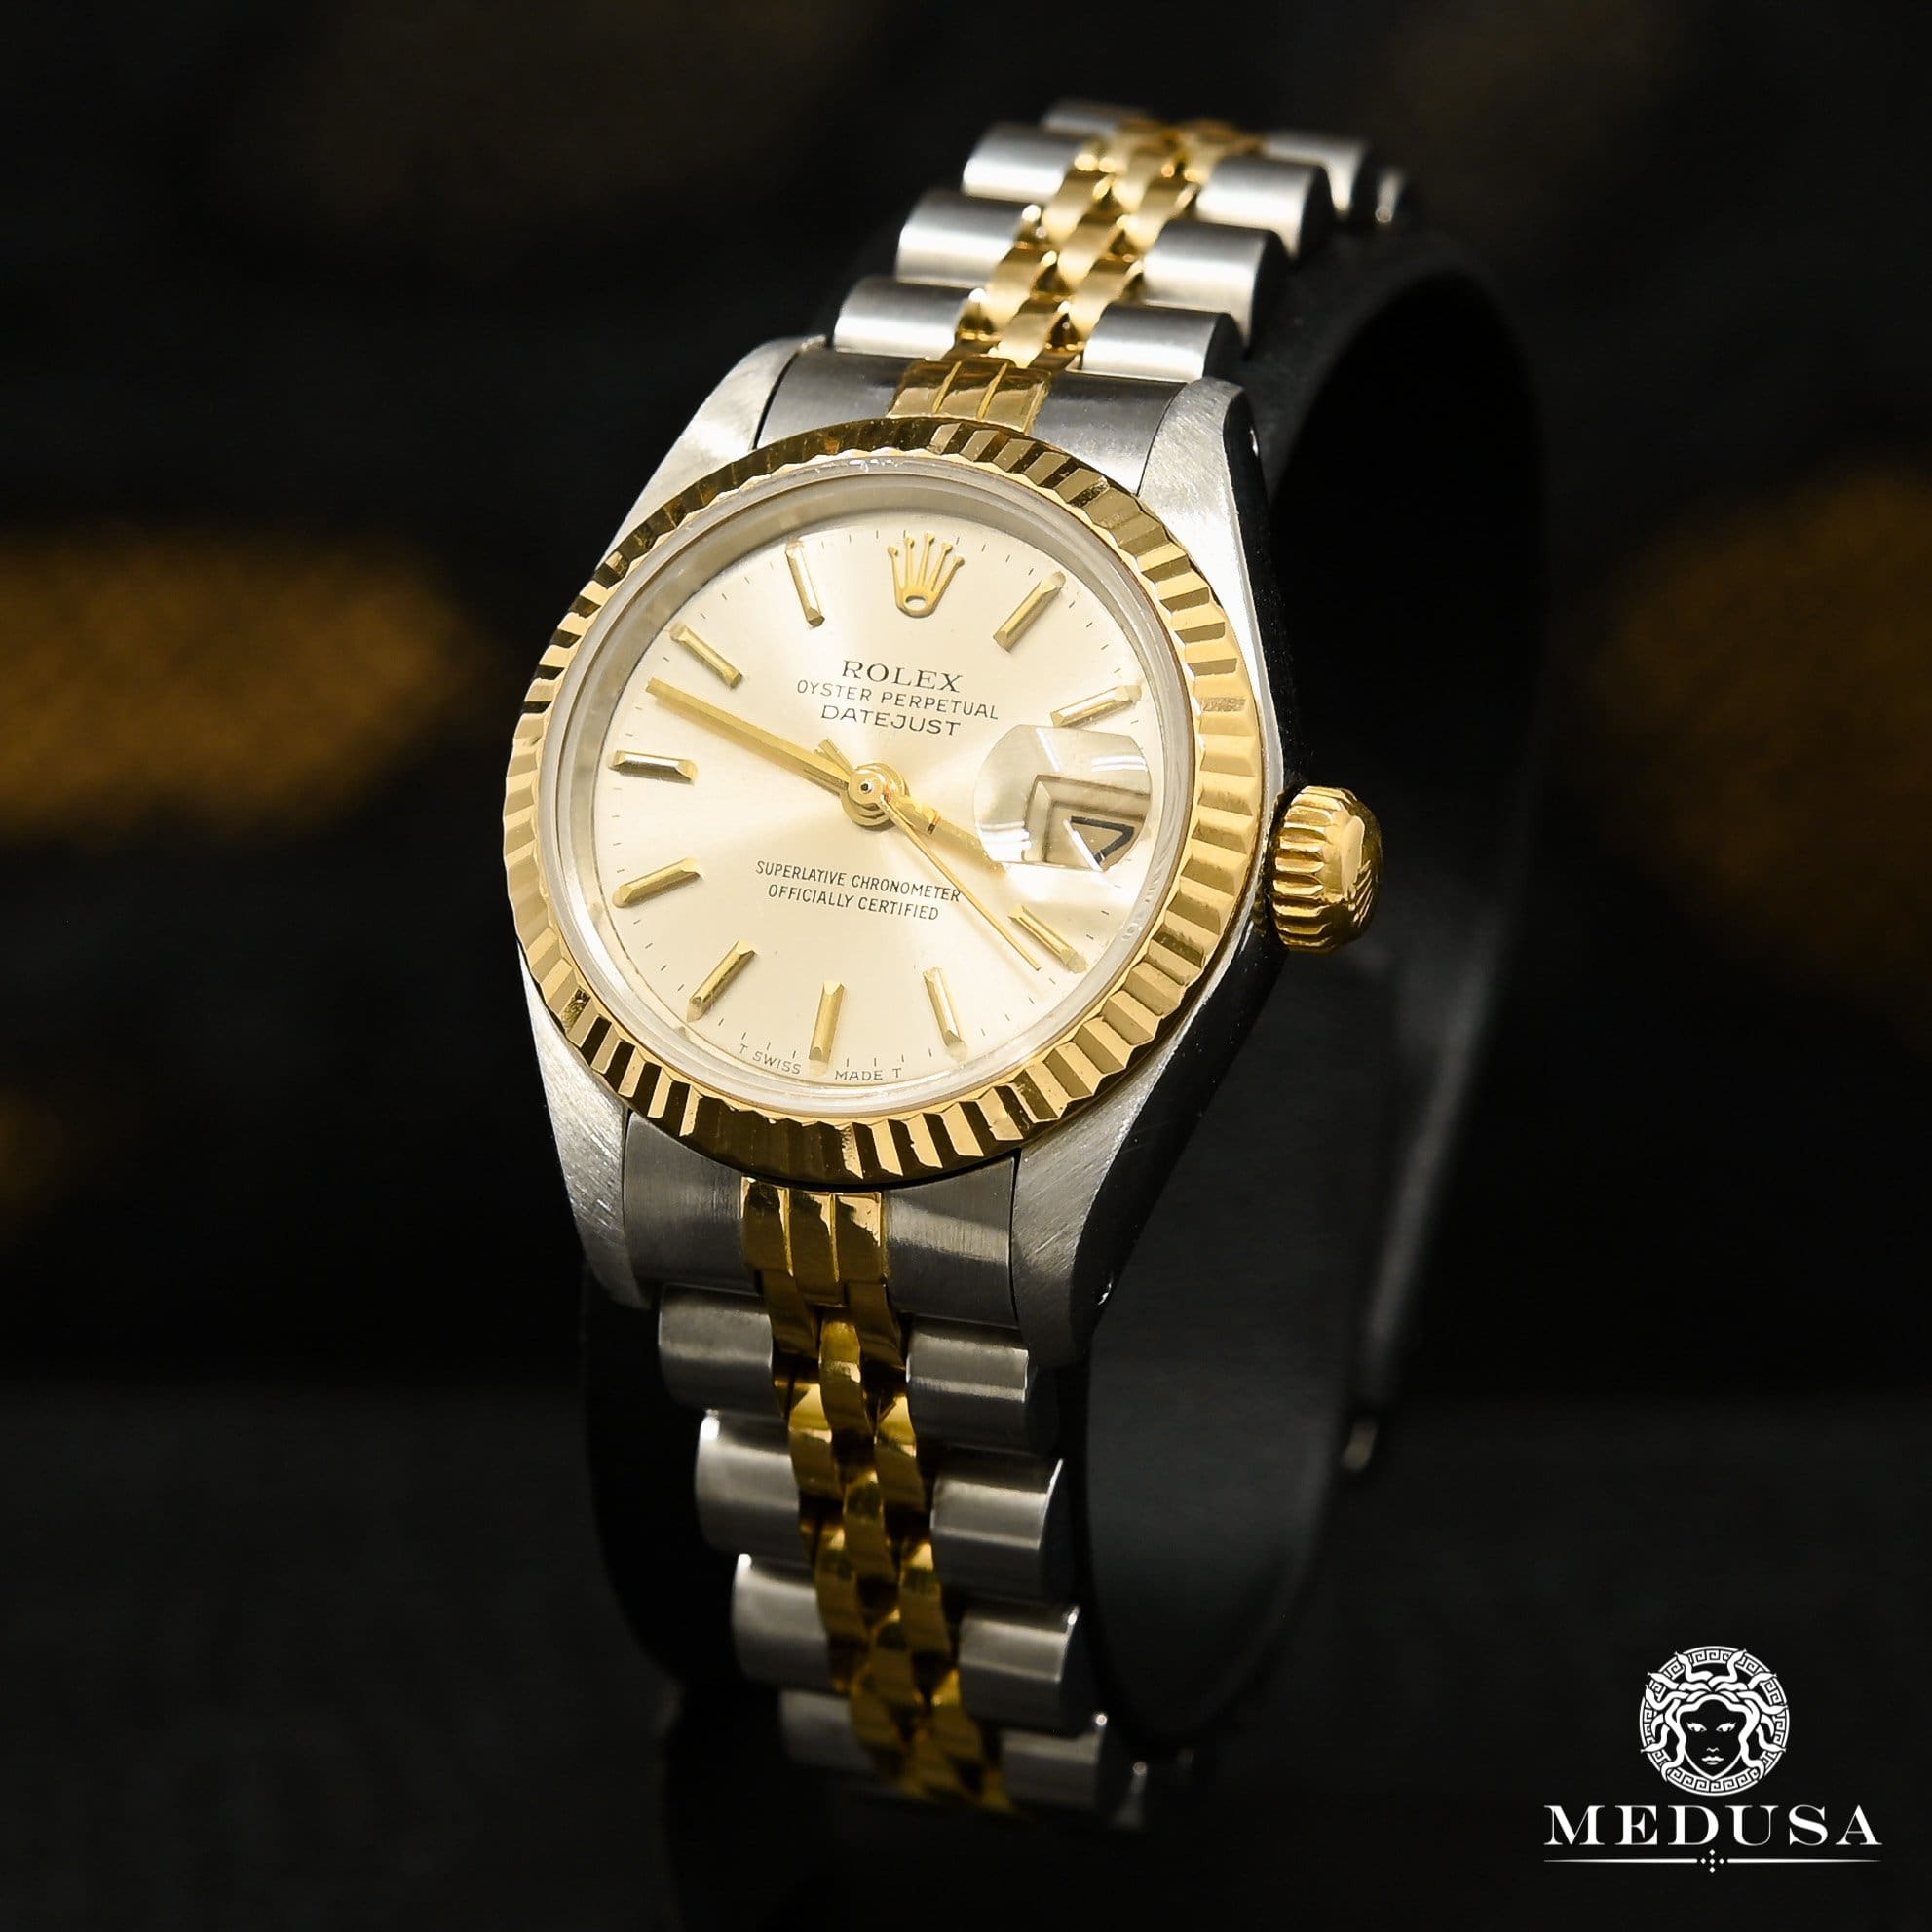 Rolex watch | Rolex Datejust Women's Watch 26mm - Silver Gold 2 Tones